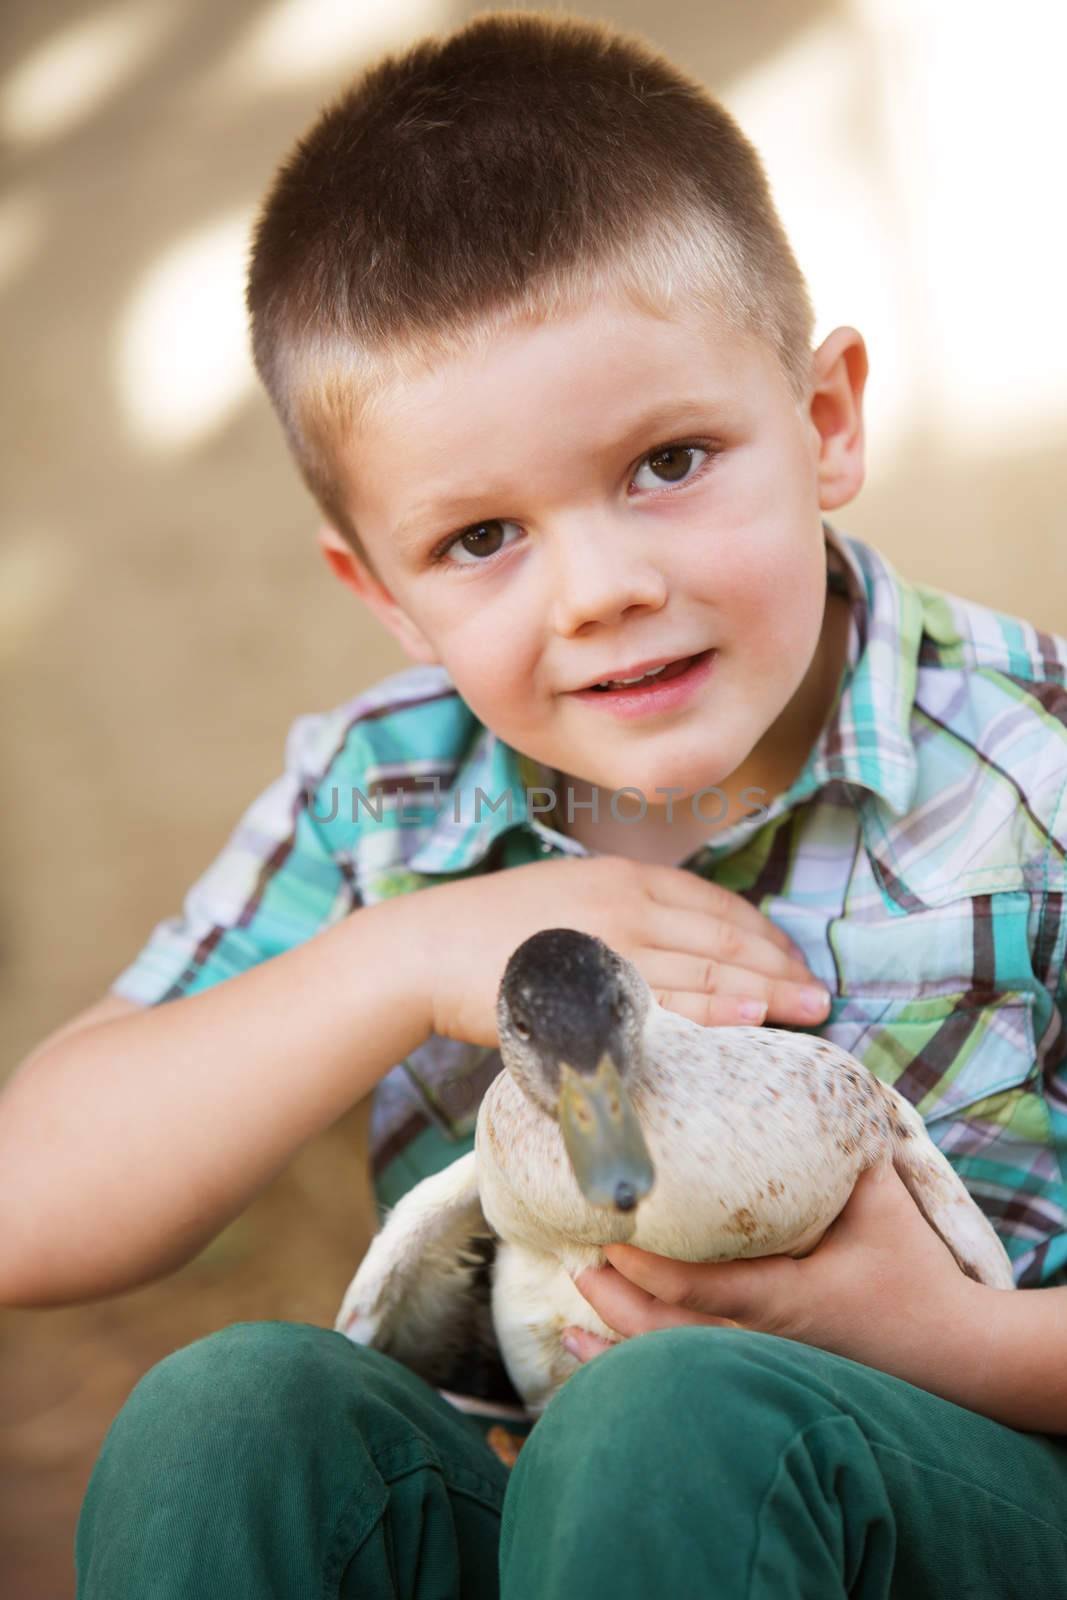 Smiling little boy petty a duck outdoors